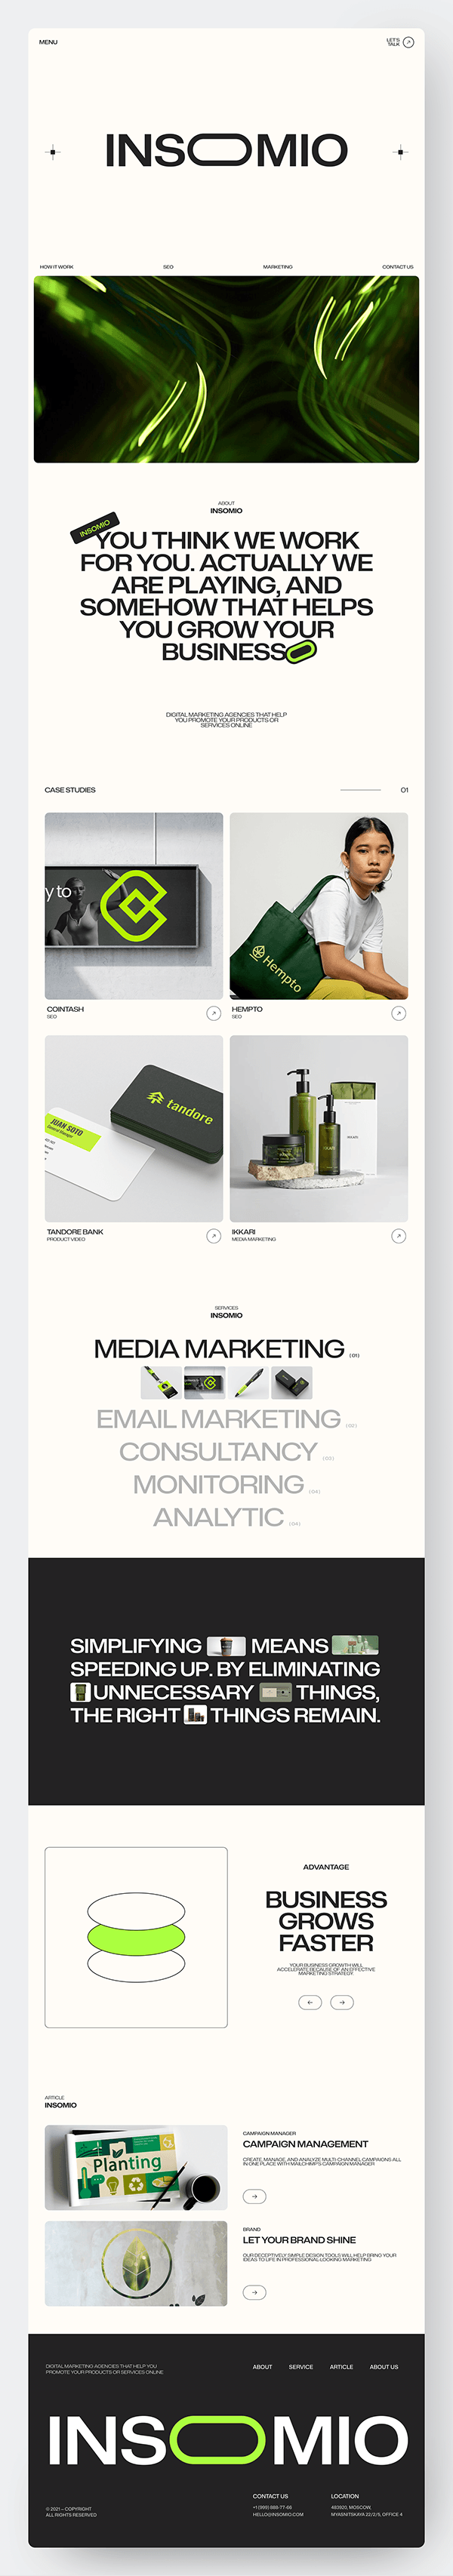 Insomio - Digital Marketing Agency Landing Page